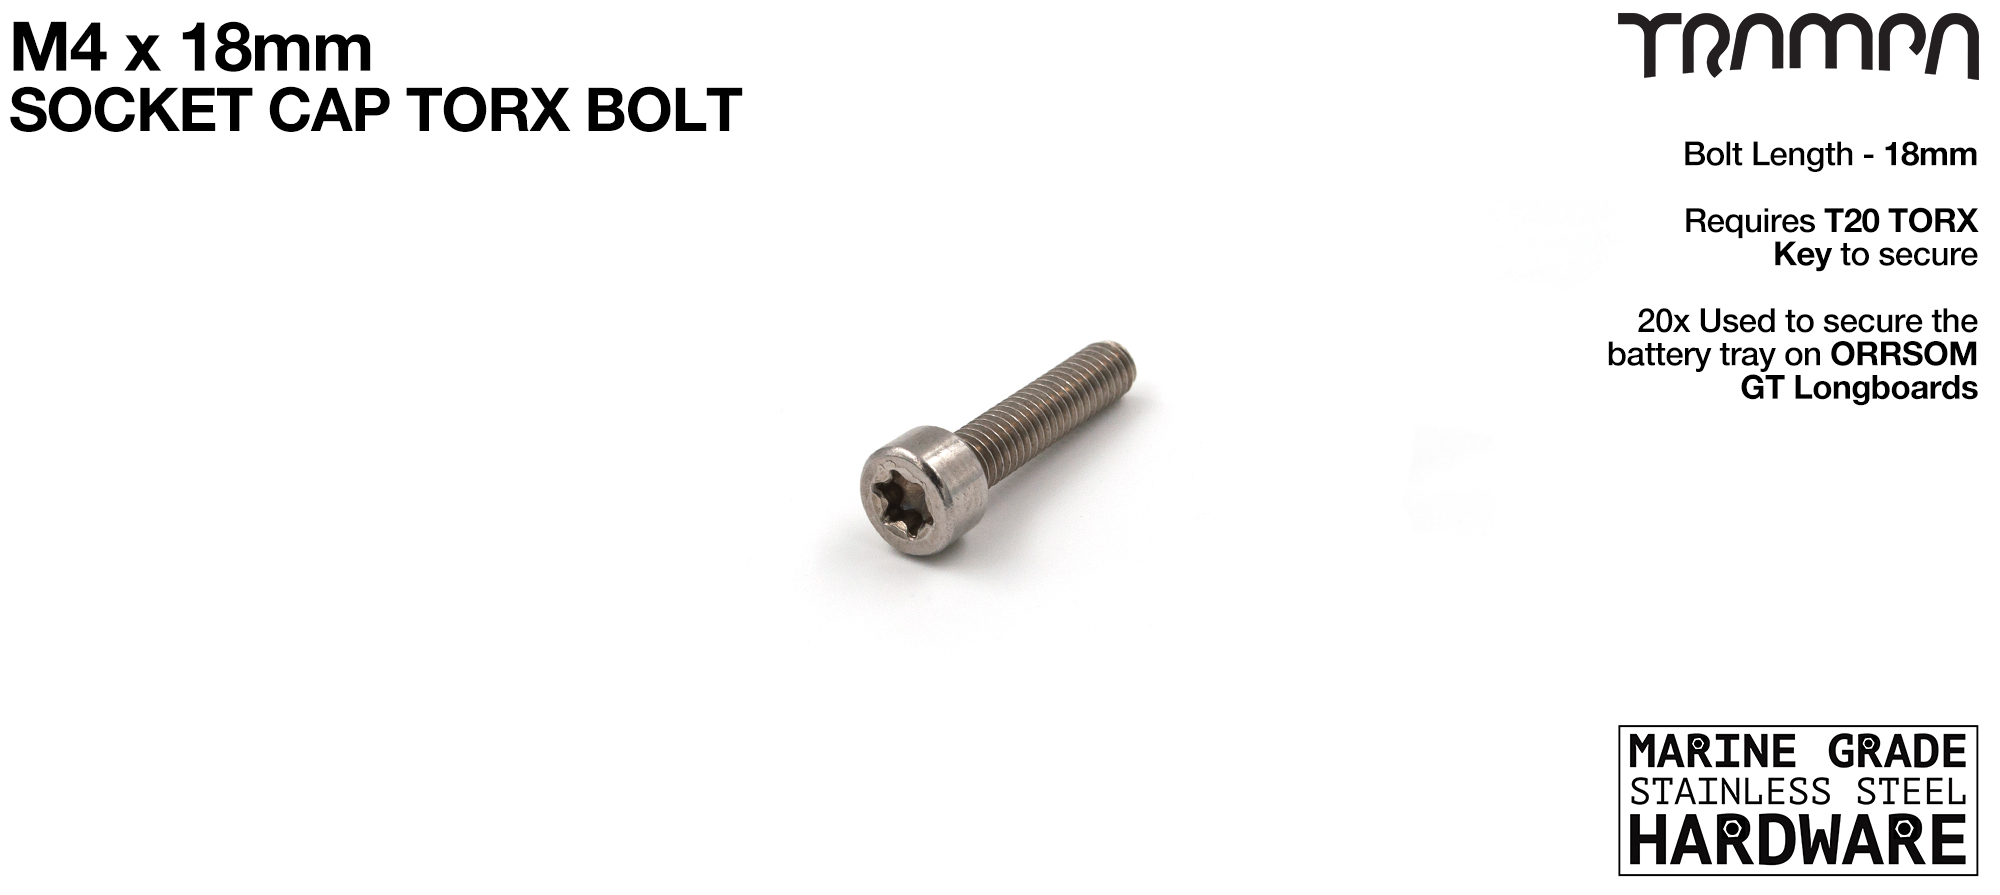 M4 x 18mm TORX Socket Capped Head Bolt ISO 4762 Marine Grade Stainless Steel 